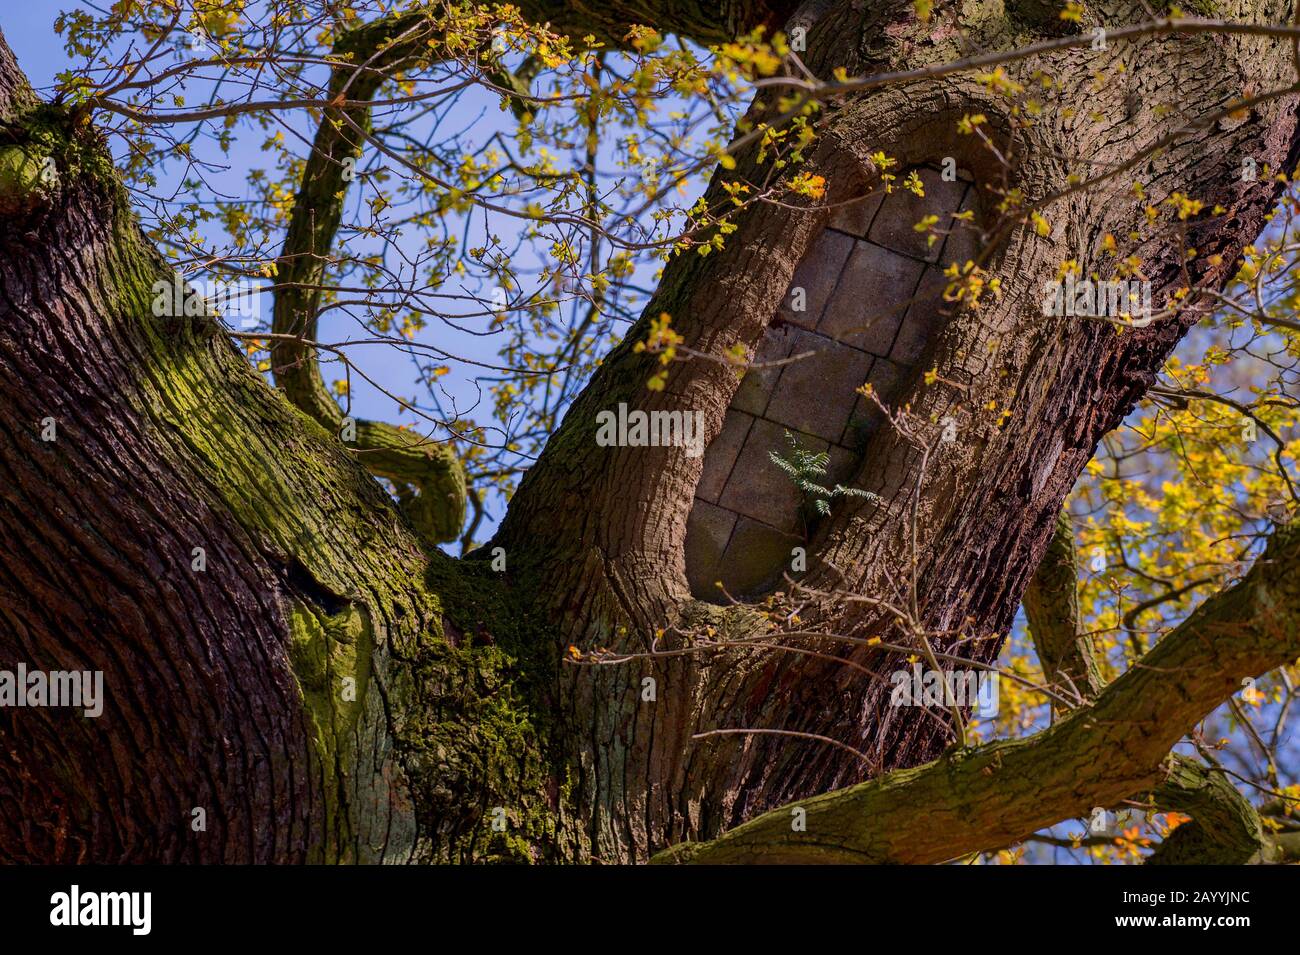 common oak, pedunculate oak, English oak (Quercus robur. Quercus pedunculata), hollow tree is filled with , Germany, Hamburg Stock Photo